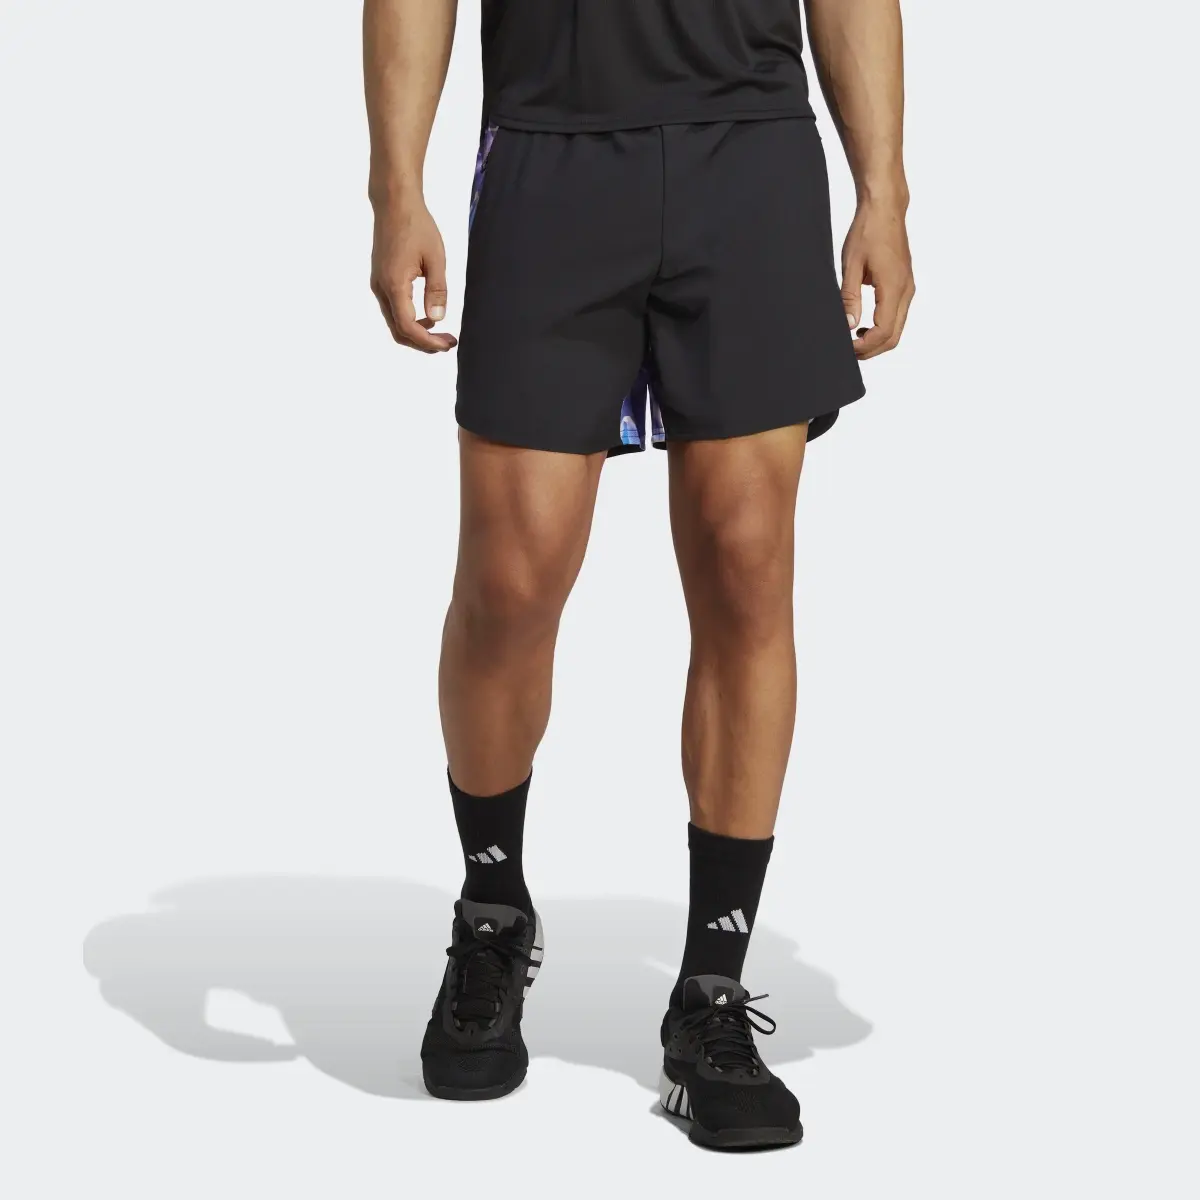 Adidas Designed for Movement HIIT Training Shorts. 1